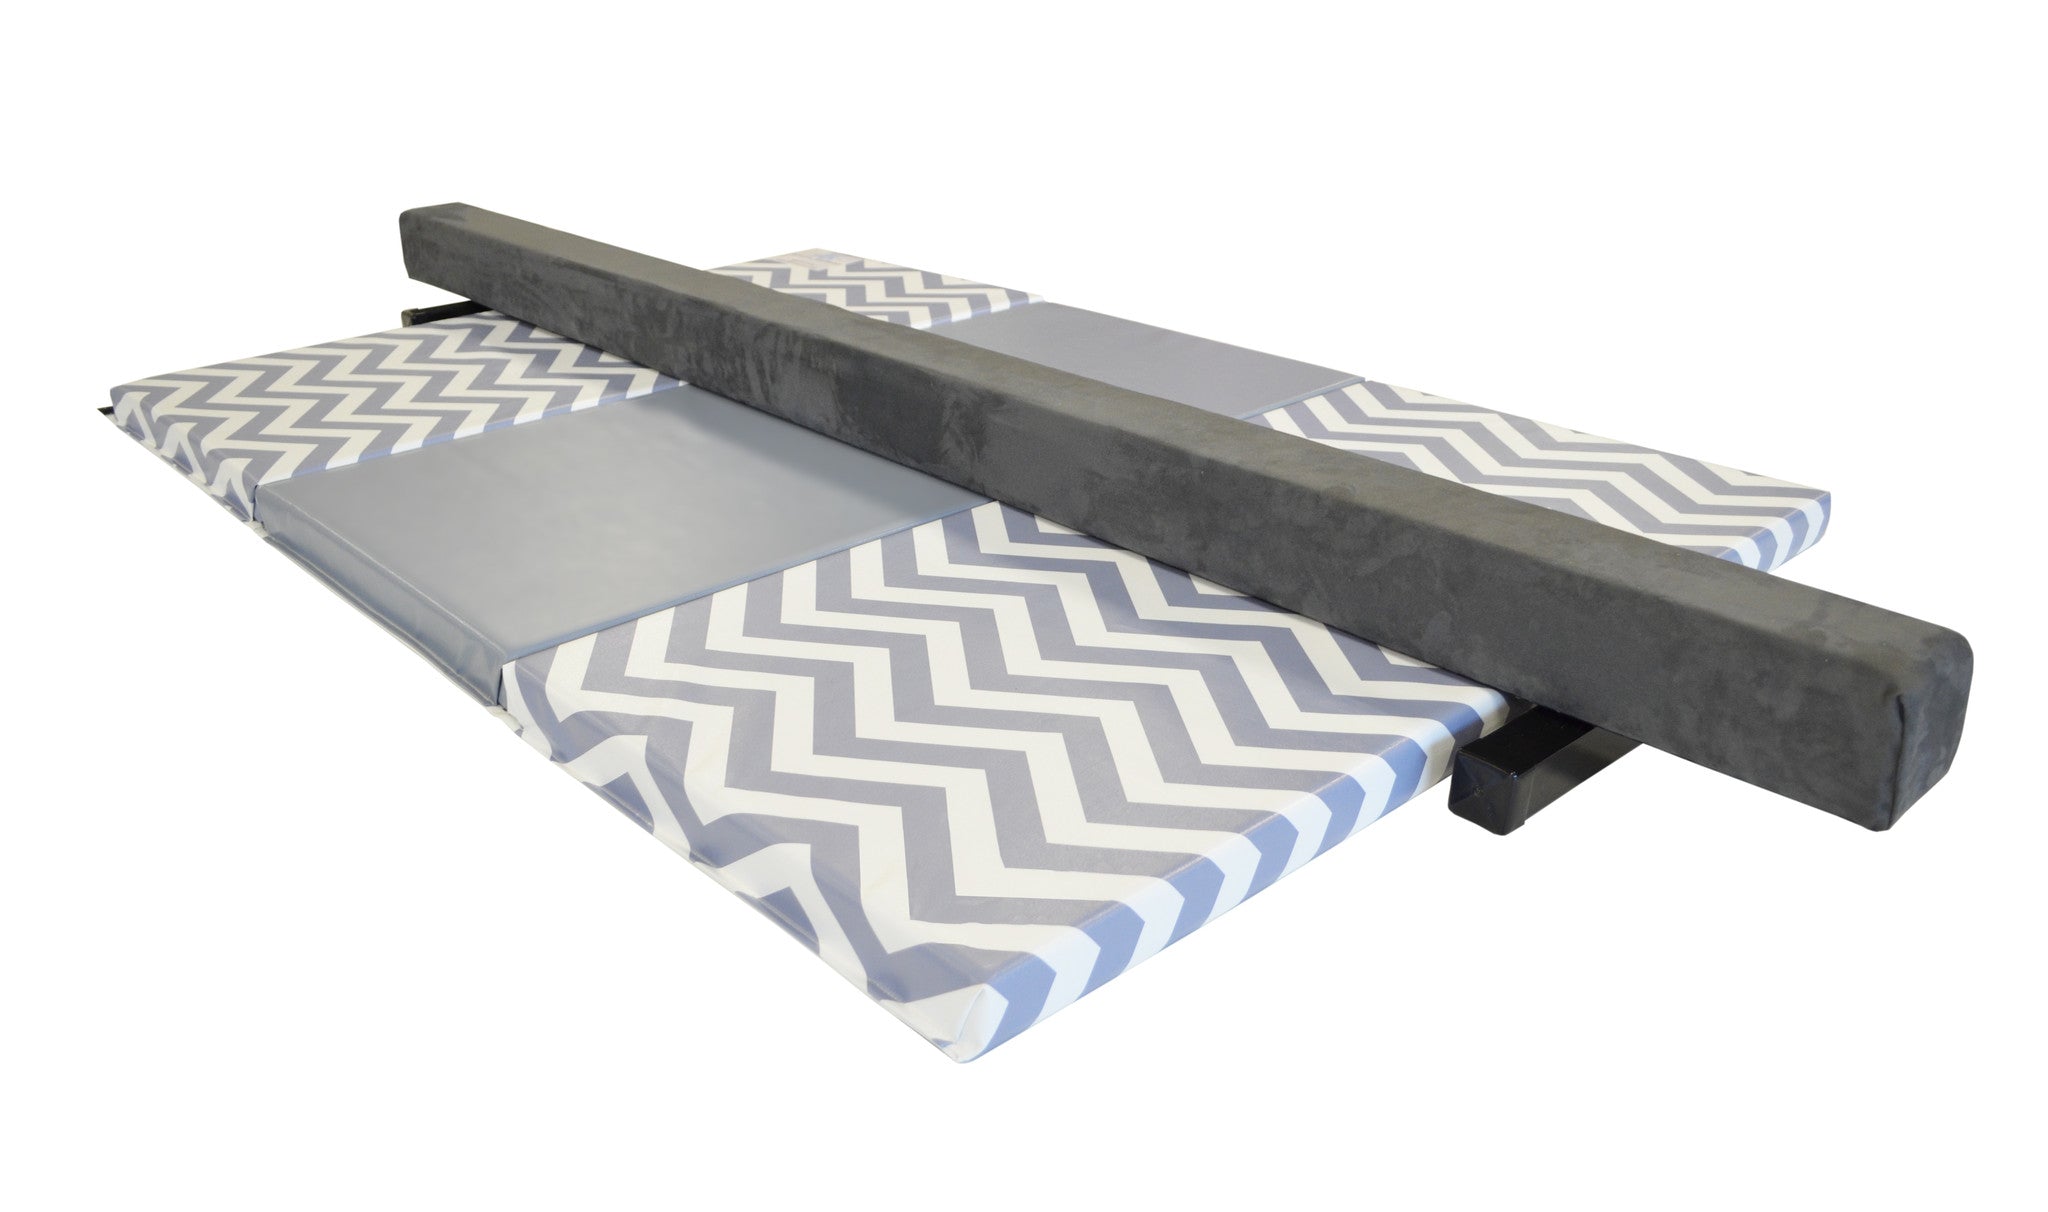 Chevron Print Gymnastics Balance Beam and Folding Mat Combo Package